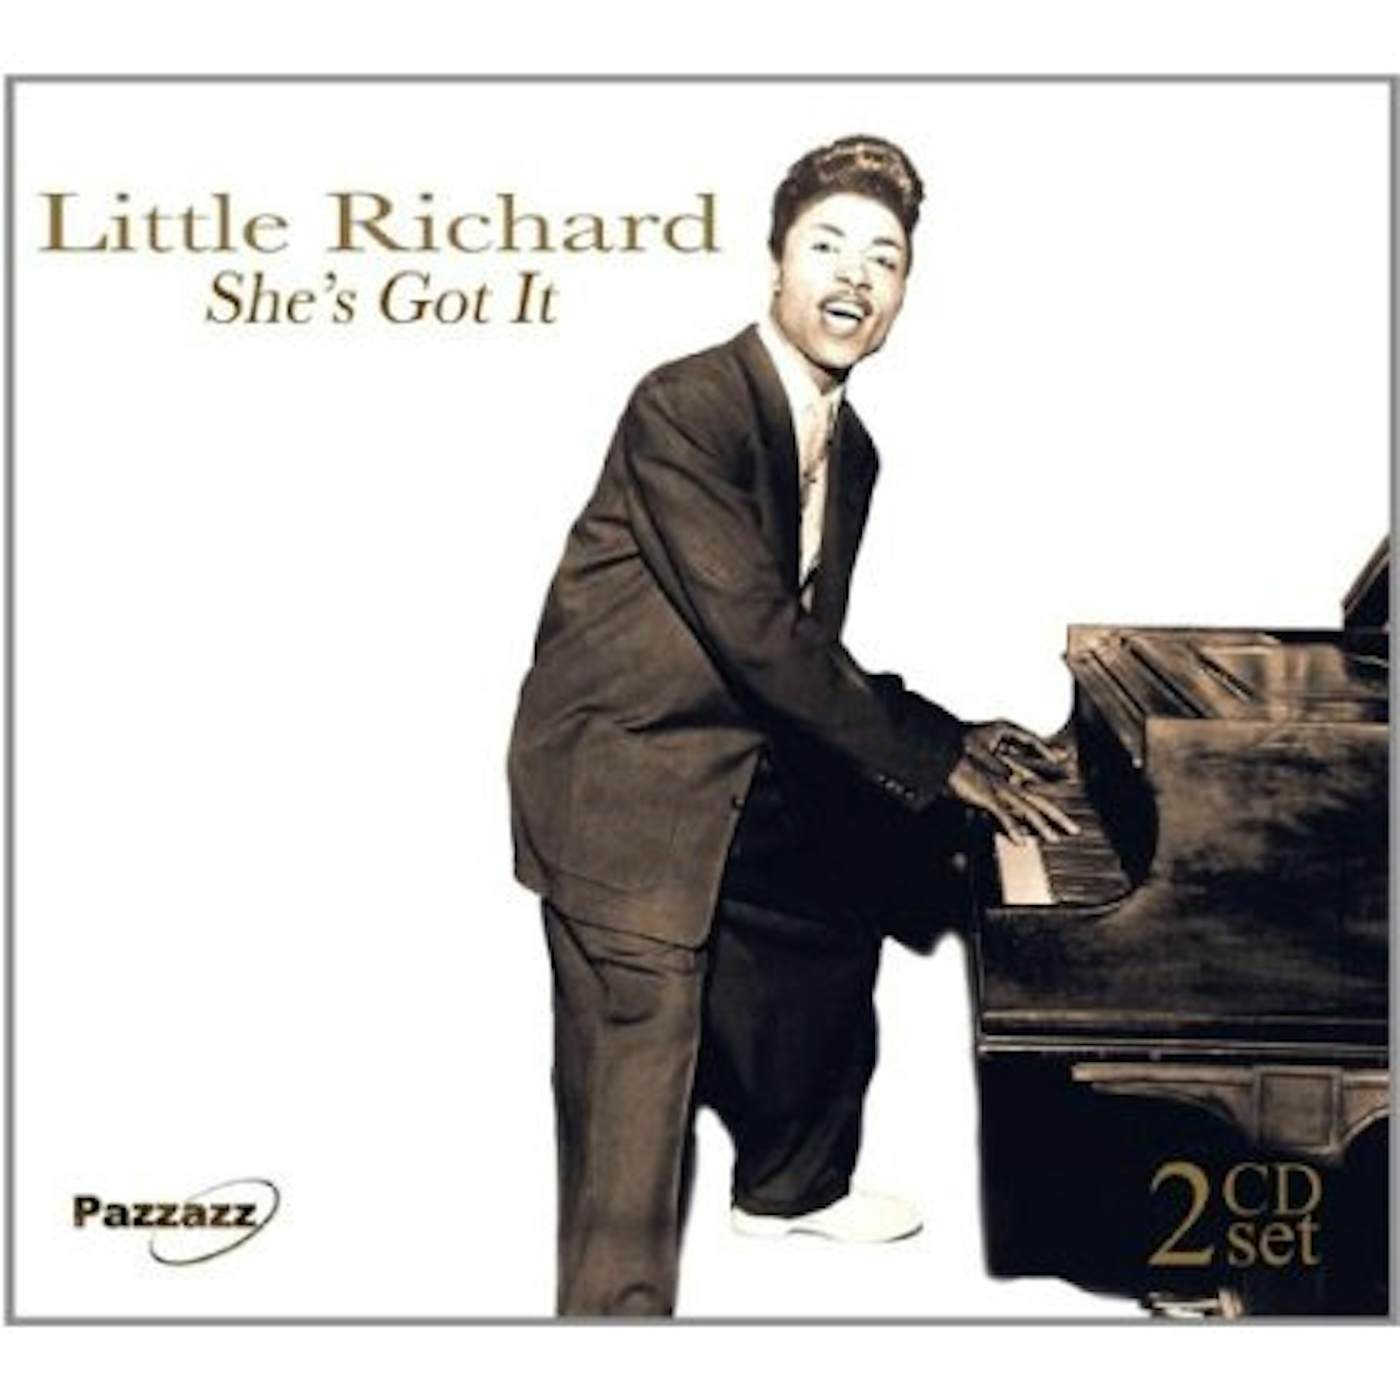 Little Richard SHE'S GOT IT CD